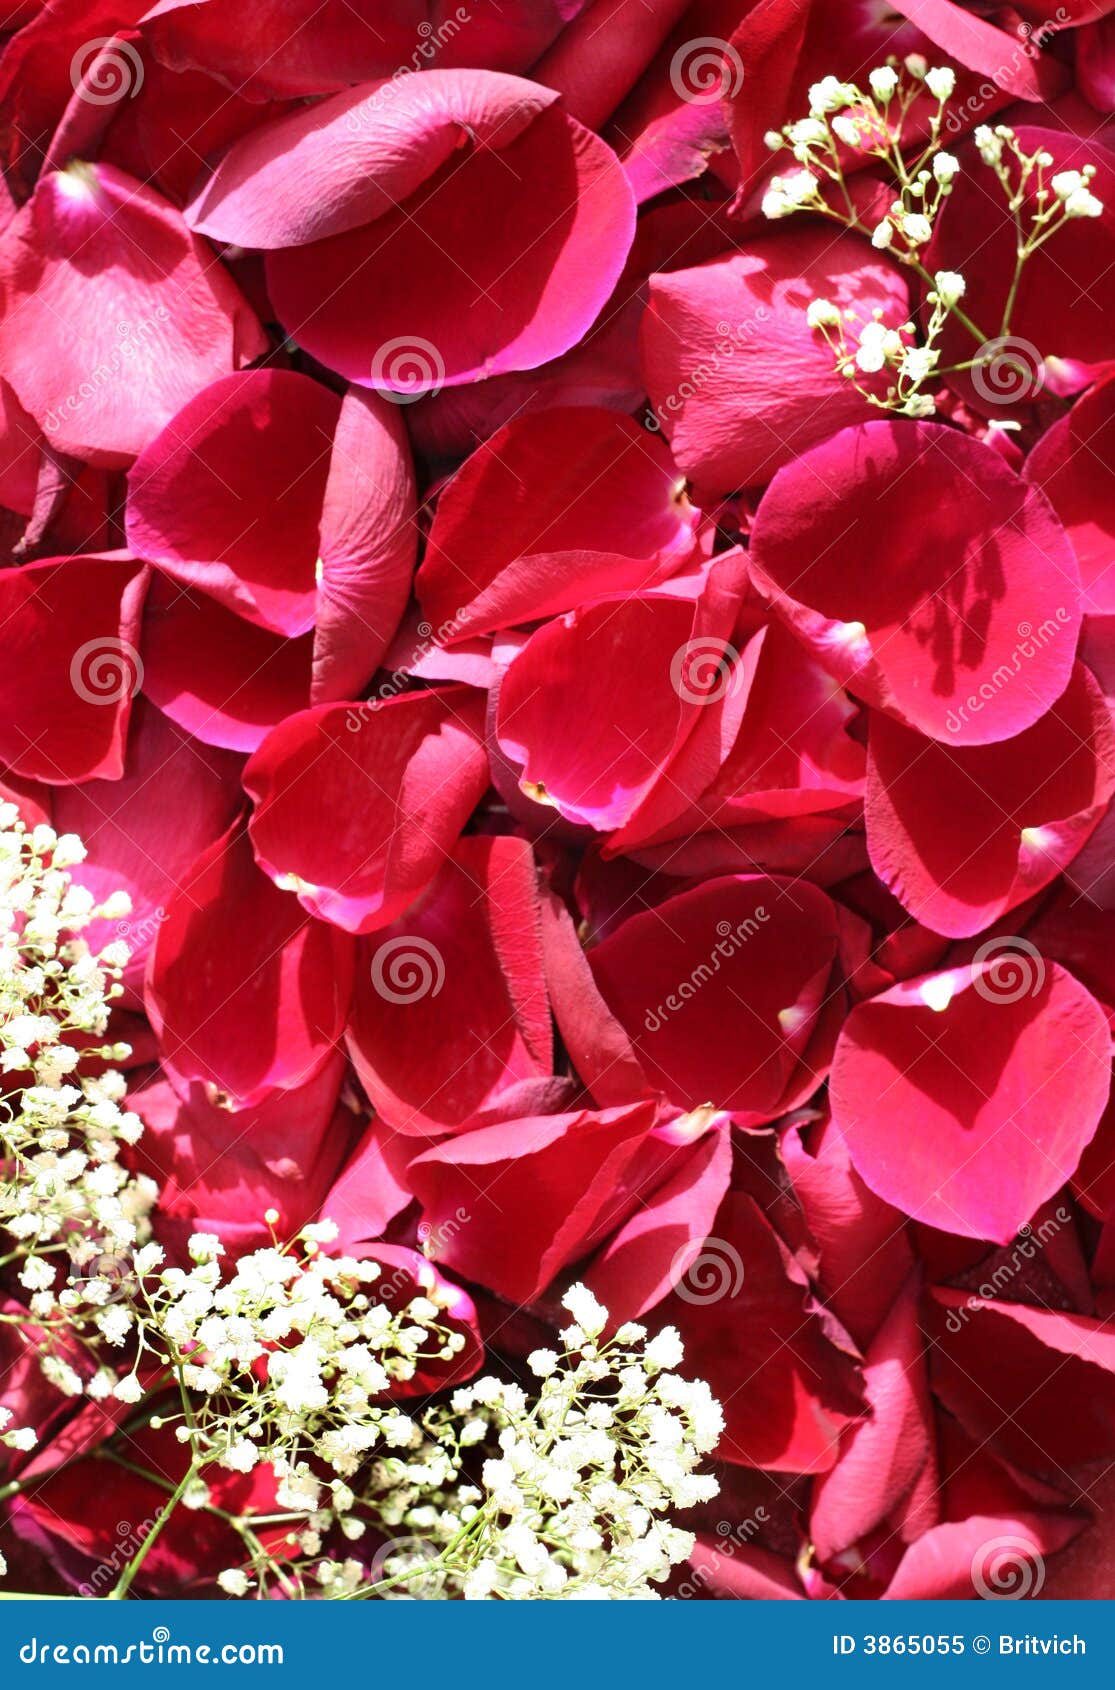 108,796 Roses Petals Stock Photos - Free & Royalty-Free Stock